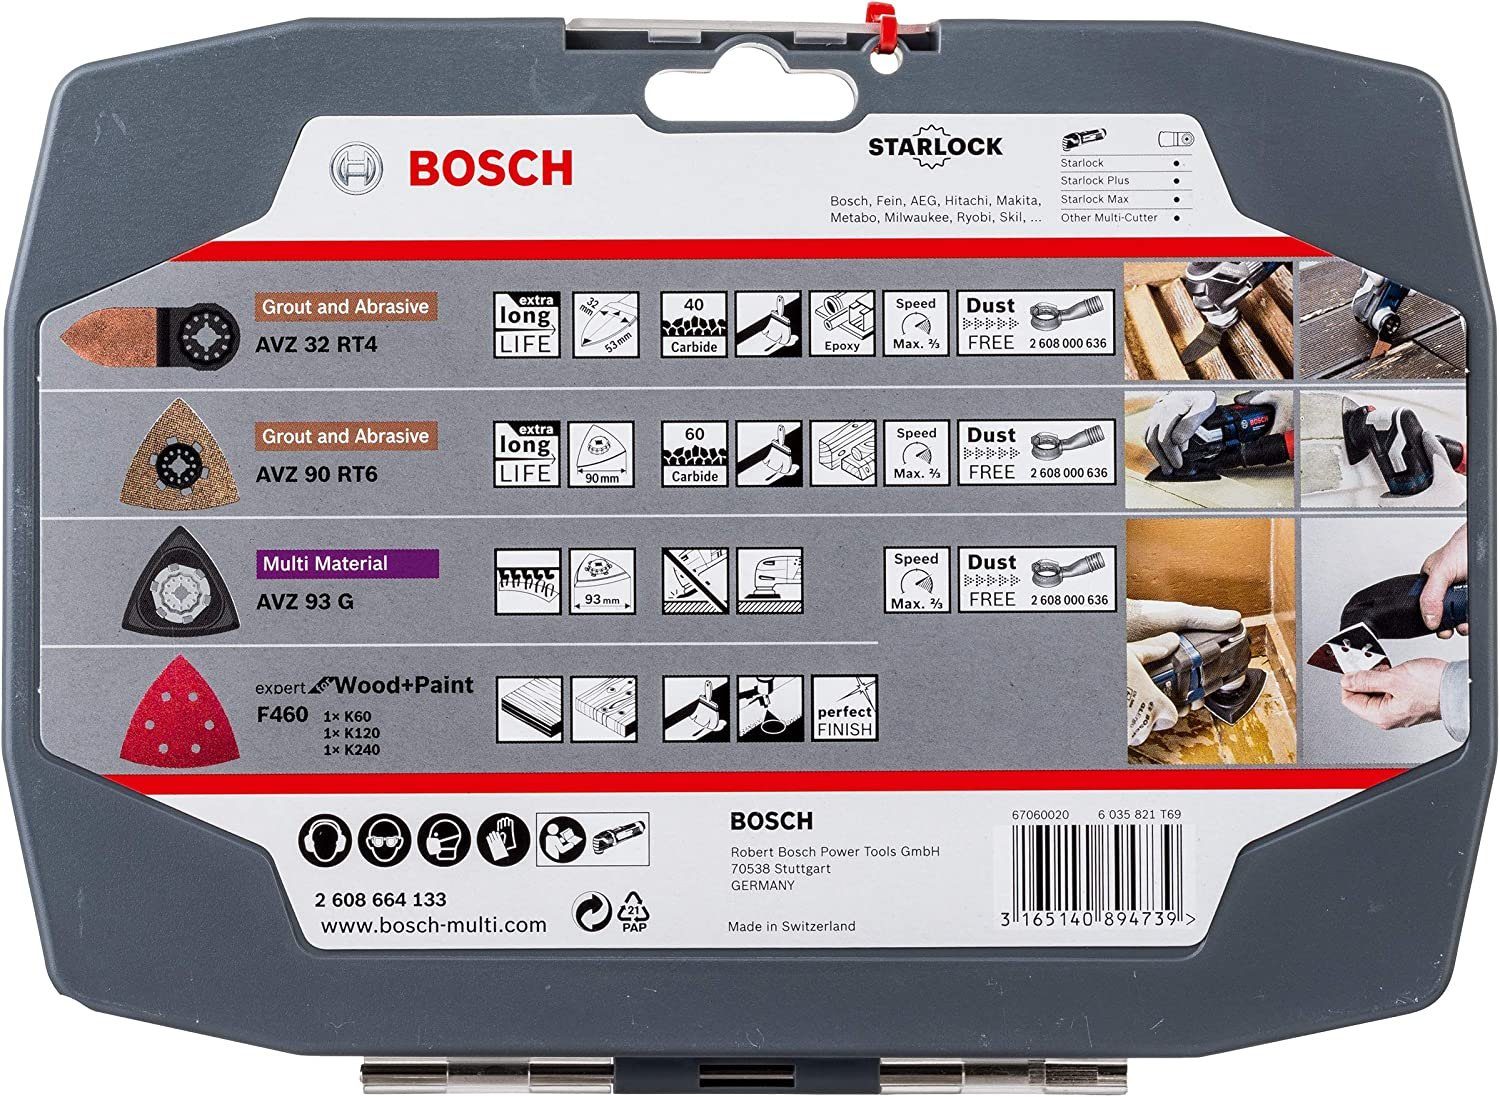 Starlock of Professional Bosch 6 Best Set Schleifblatt BOSCH Bohrfutter tlg. Sanding